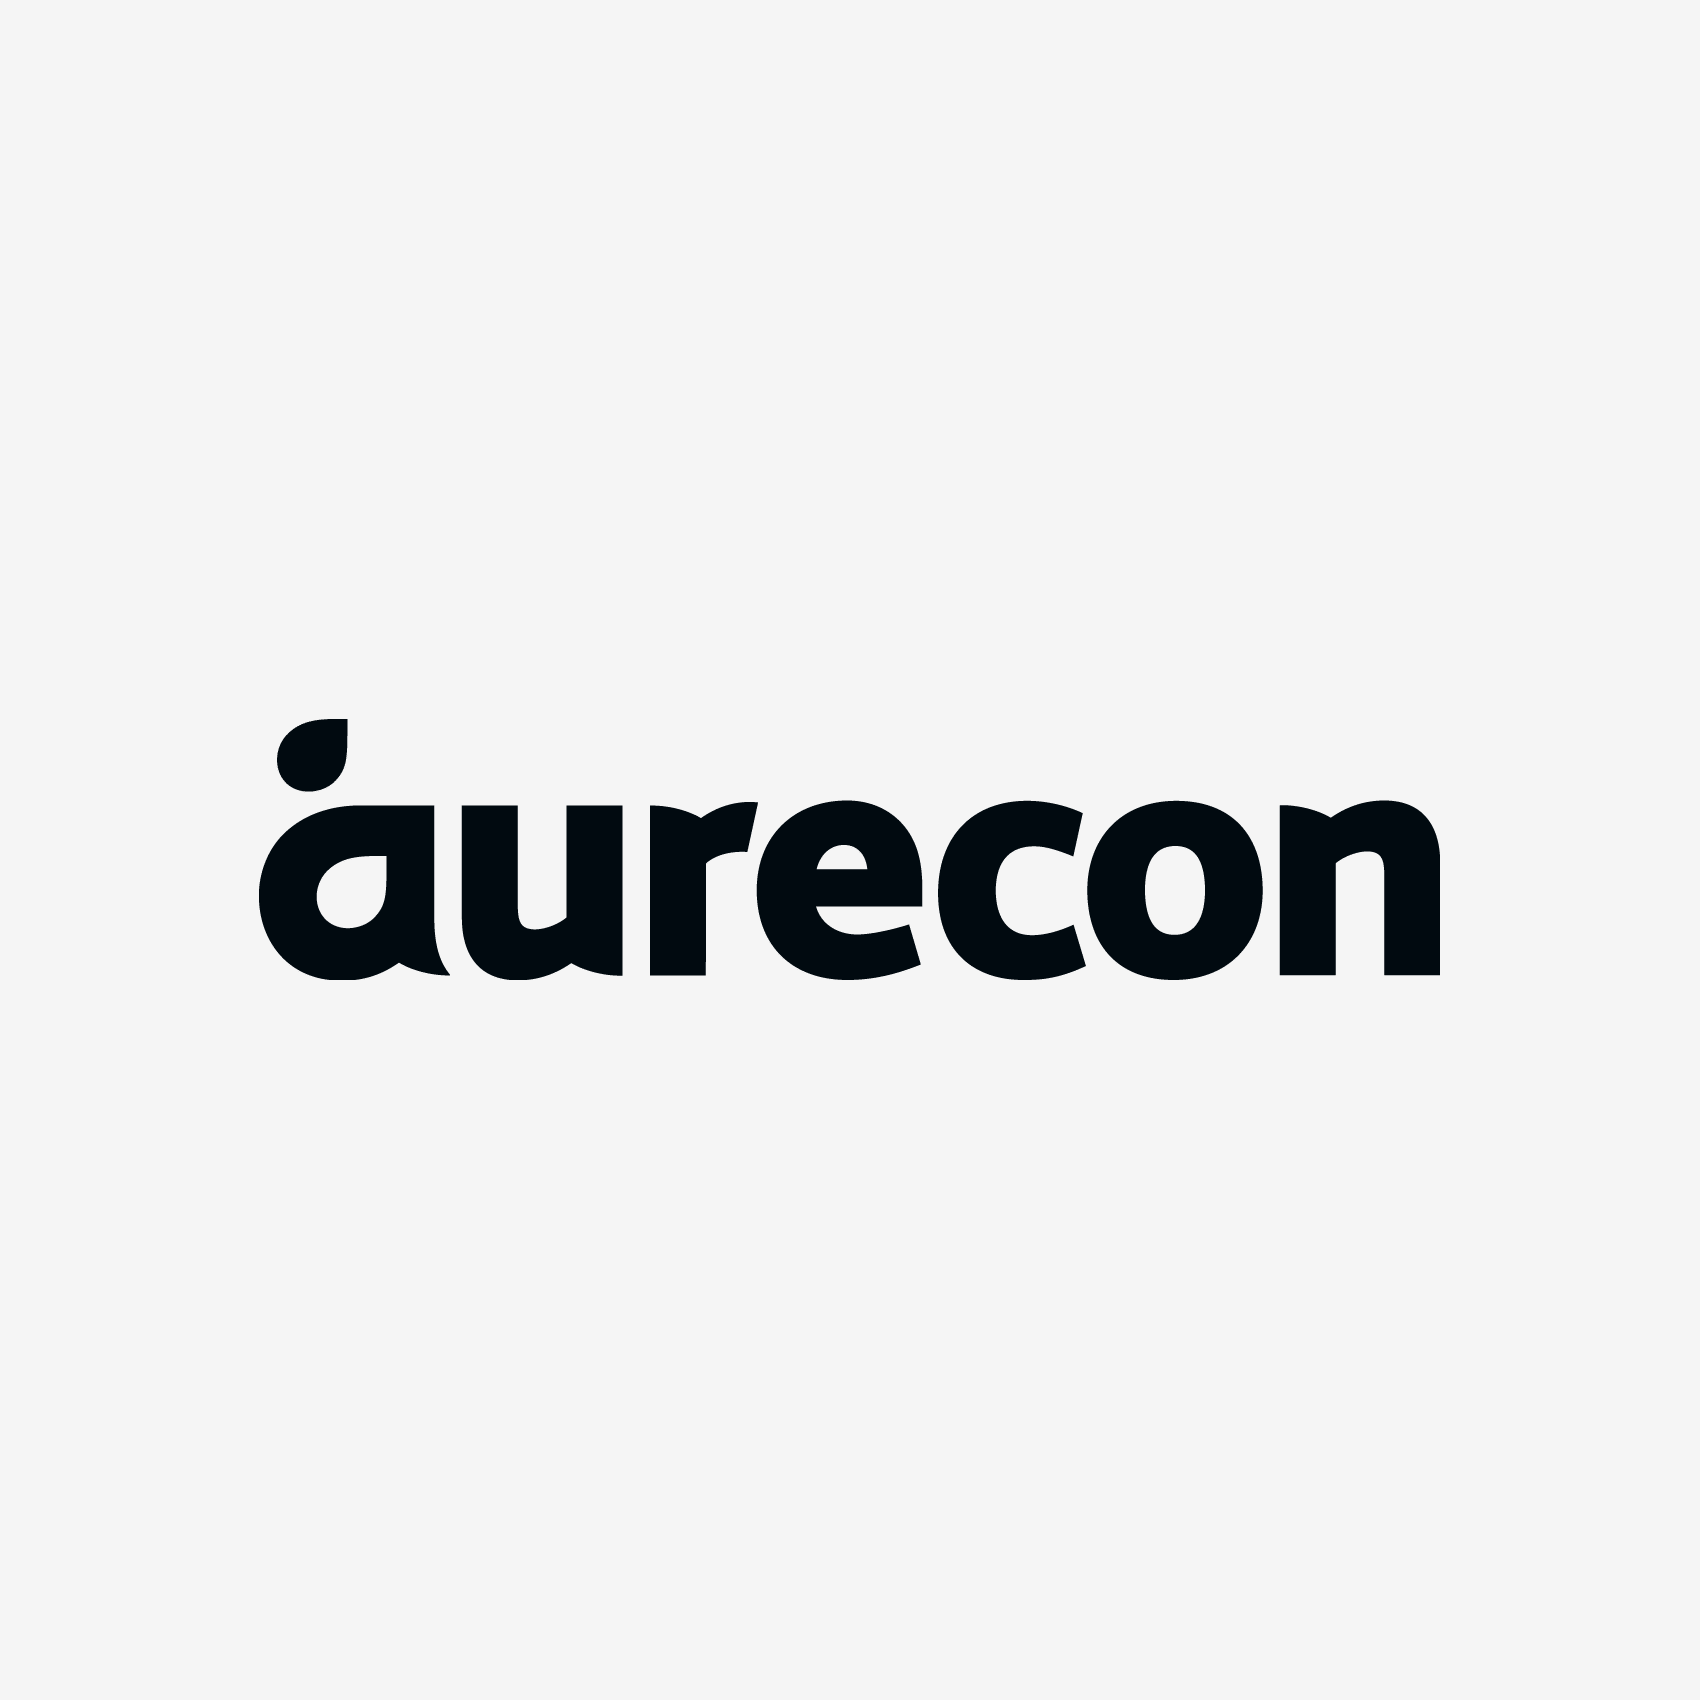 Aurecon-Logo_Web_Ready.png